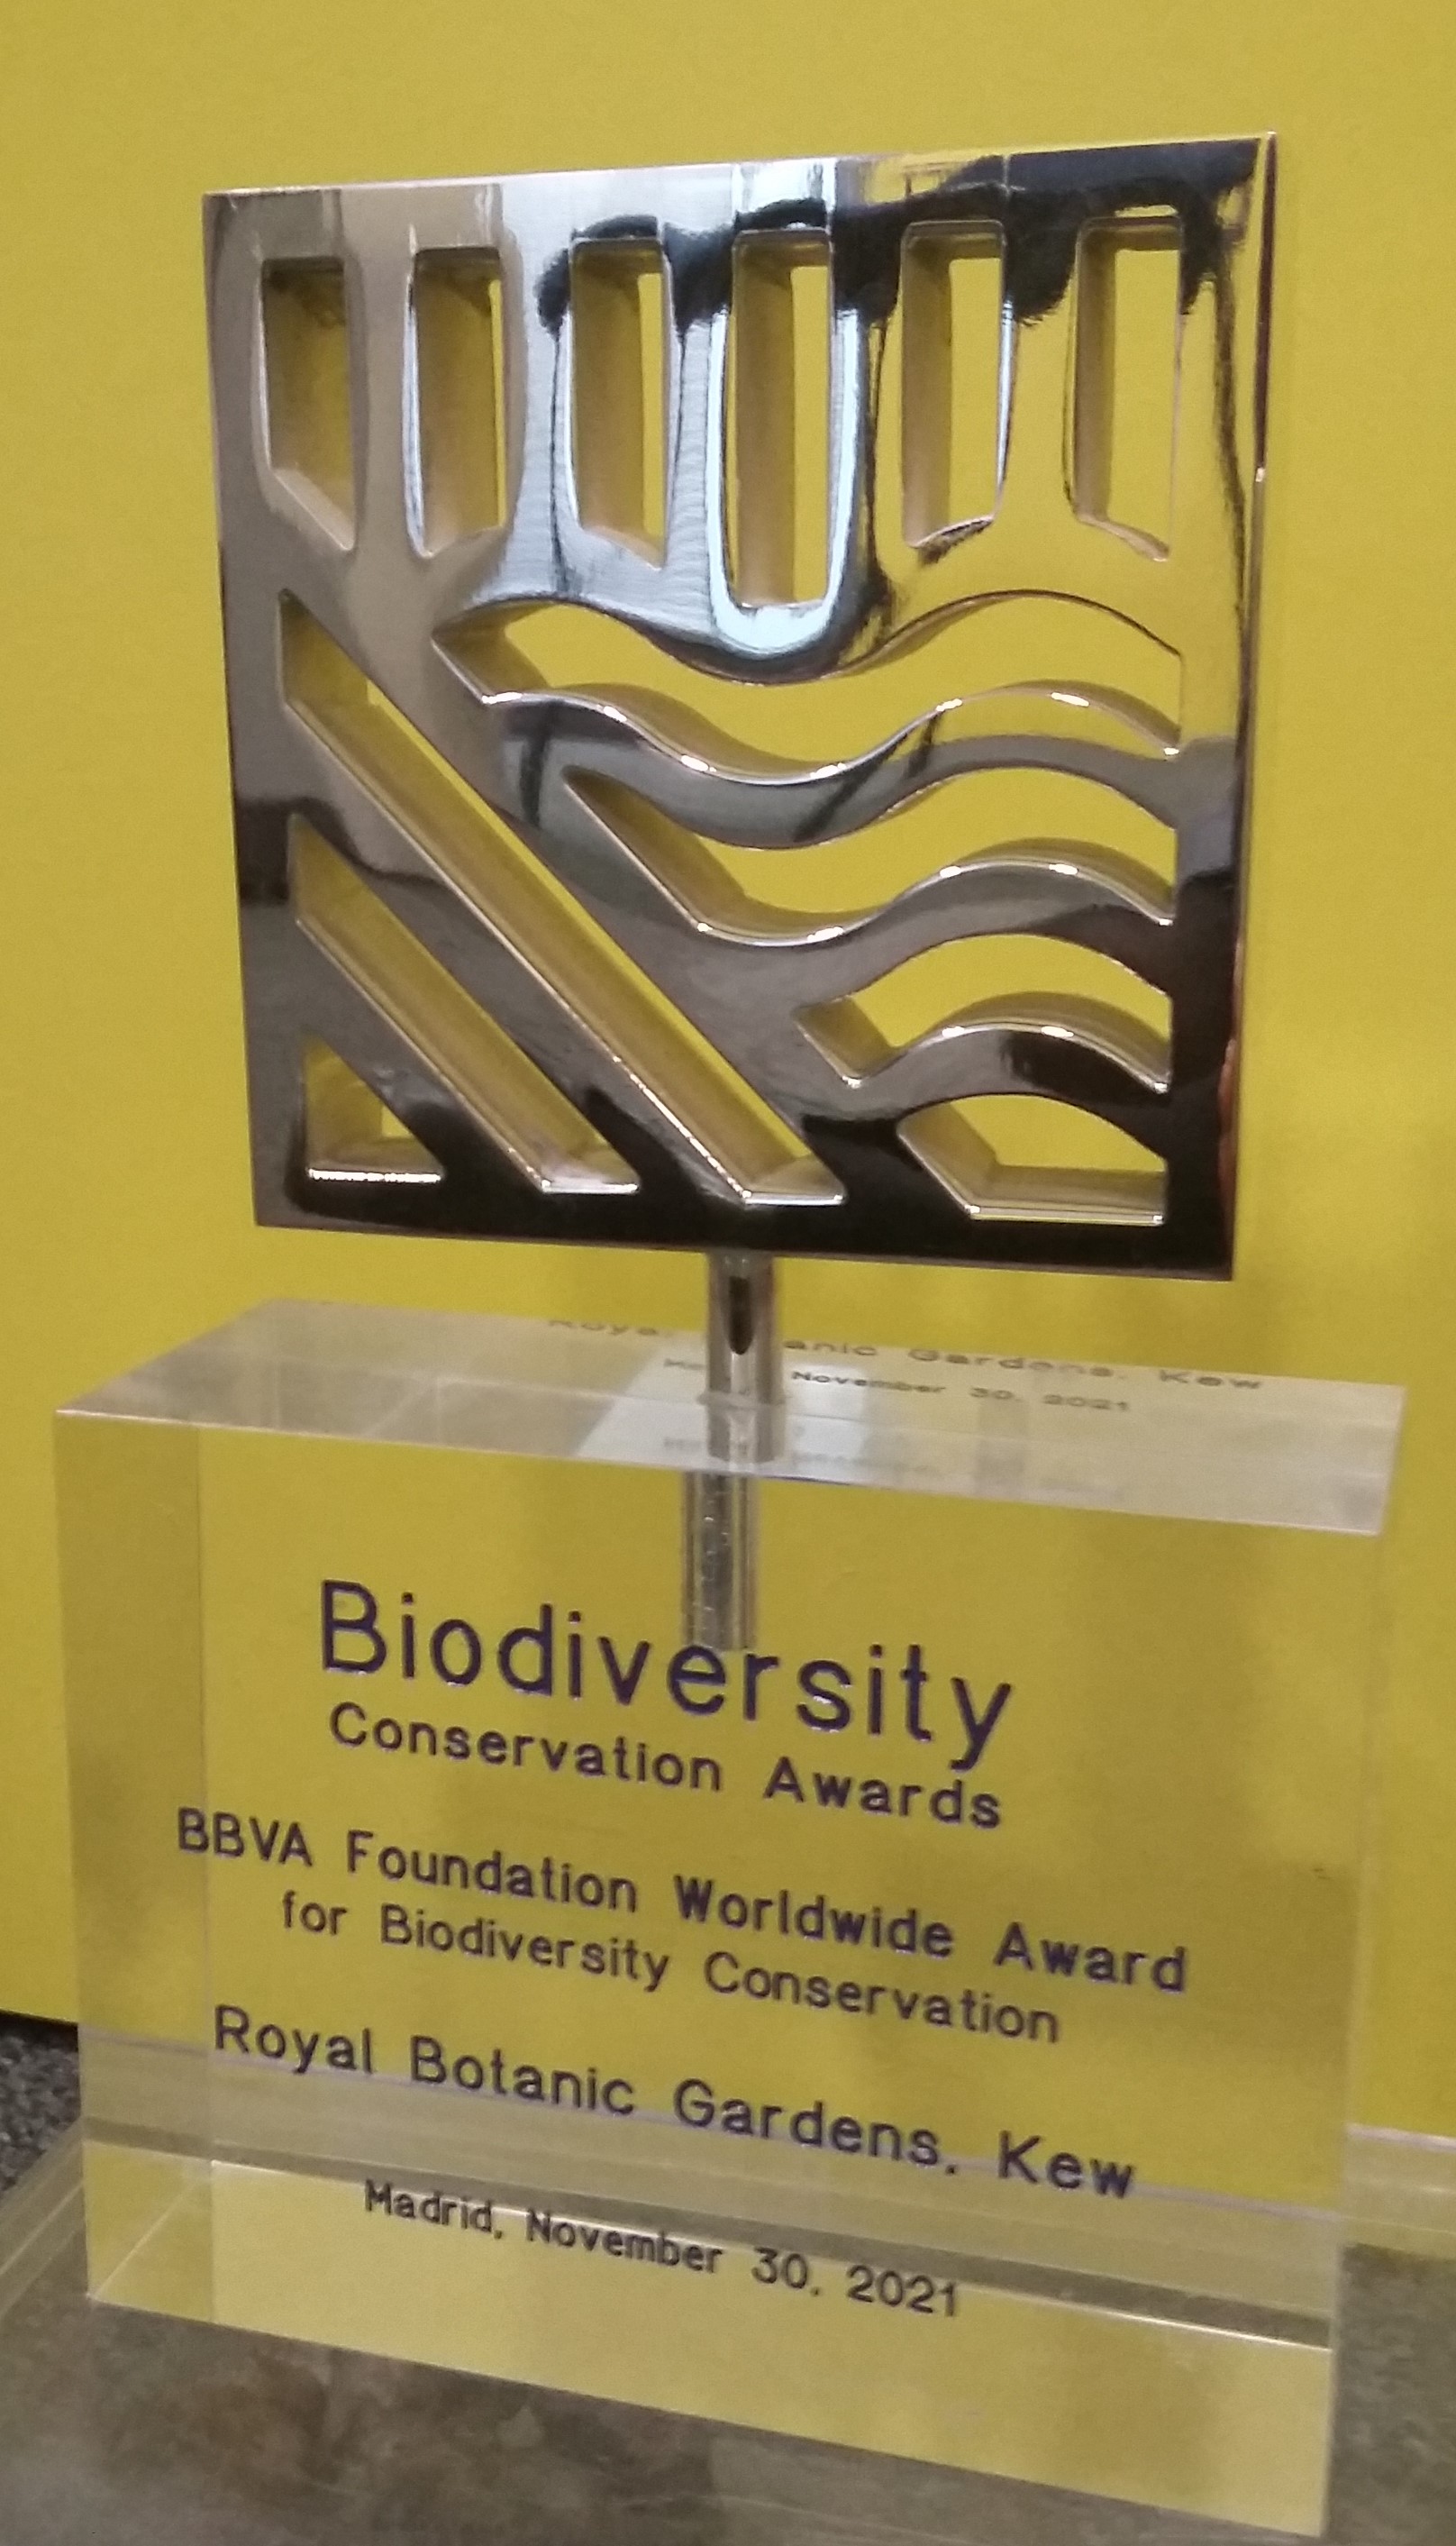 The award engraved with the text Biodiversity Conservation Awards, BBVA Foundation Worldwide Award for Biodiversity Conservation, Royal Botanic Gardens, Kew, Madrid, November 30 2021